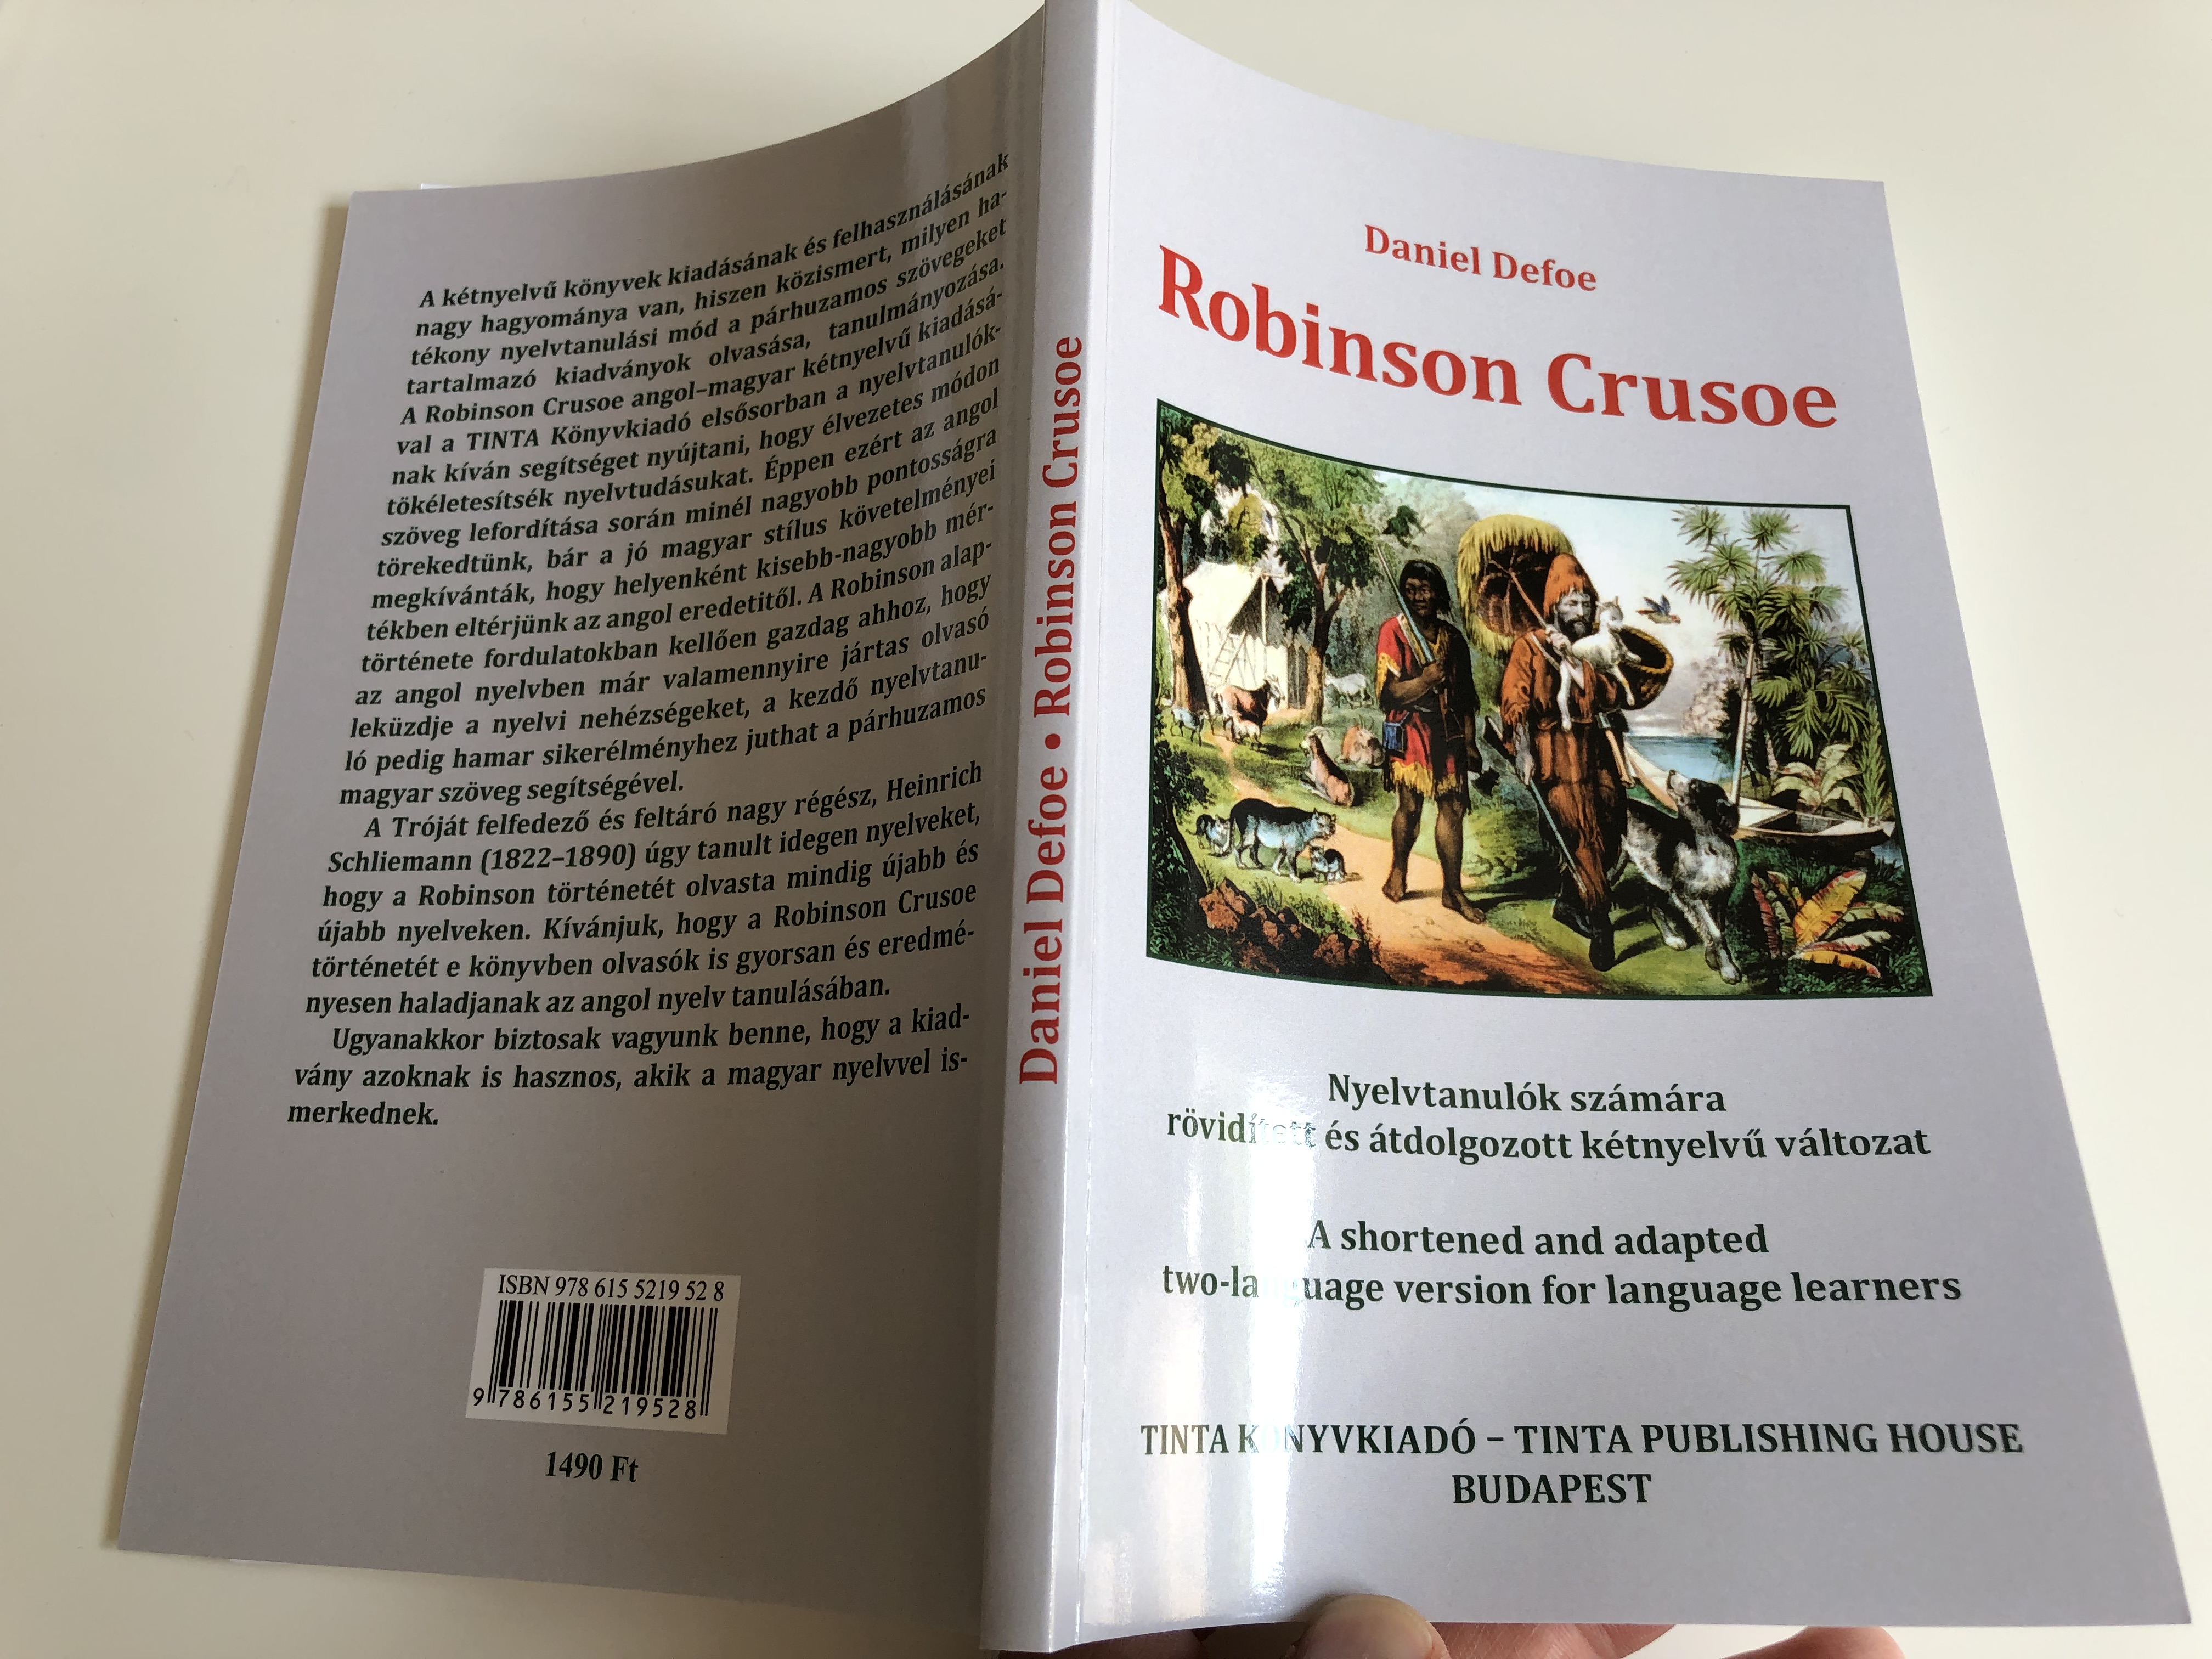 robinson-crusoe-by-daniel-defoe-a-shortened-and-adapted-bilingual-version-for-language-learners-hungarian-translation-sipos-j-lia-tinta-publishing-house-2013-13-.jpg